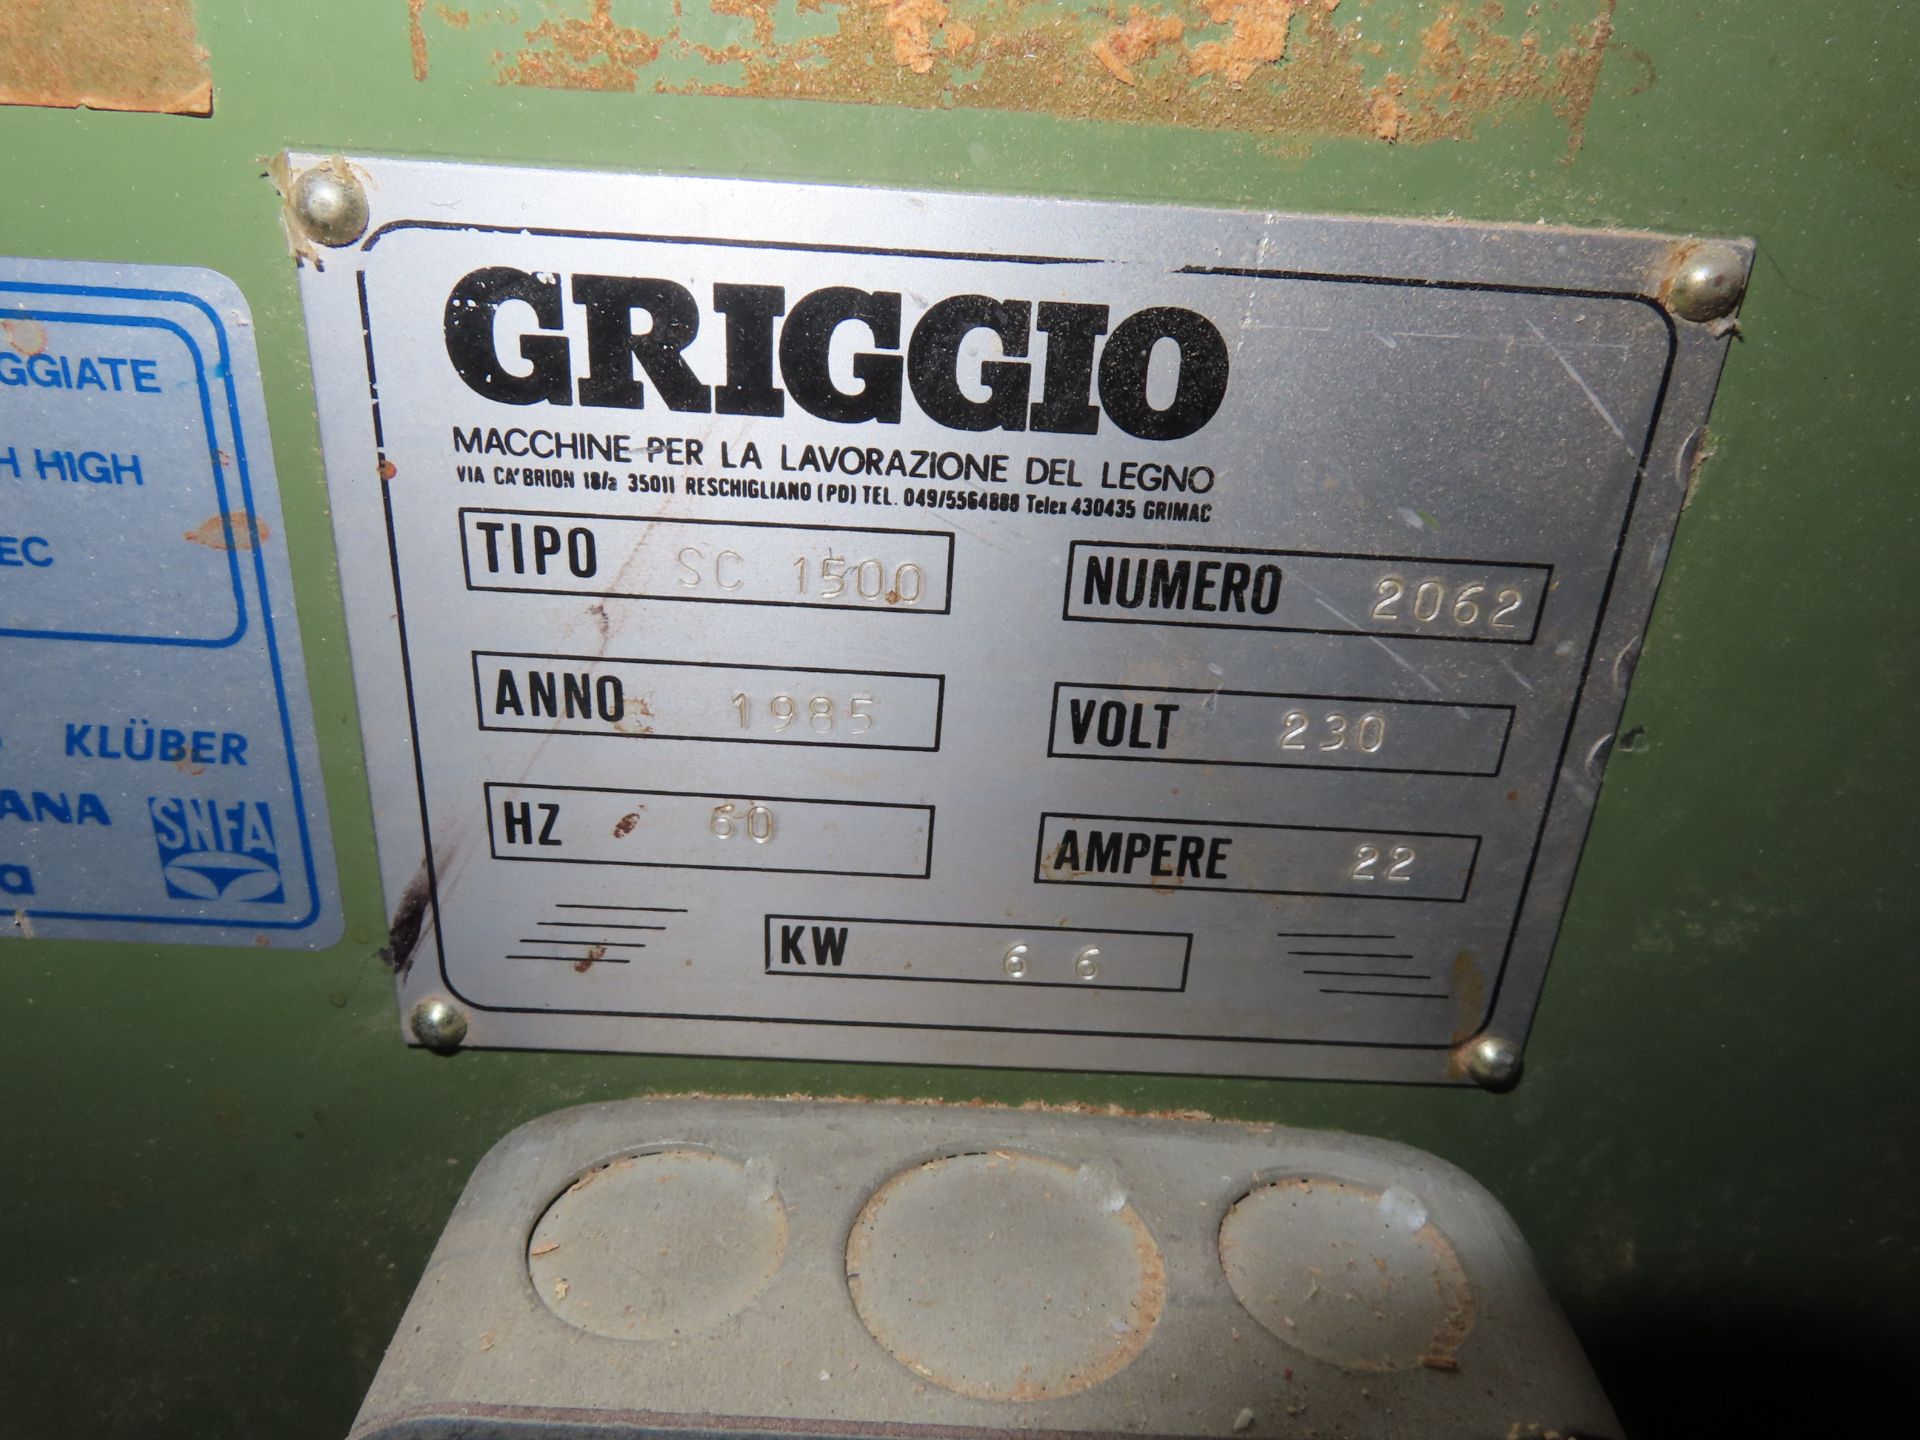 Griggio mod. SC1500, 8'' - 12'' Table Saw - Image 4 of 4